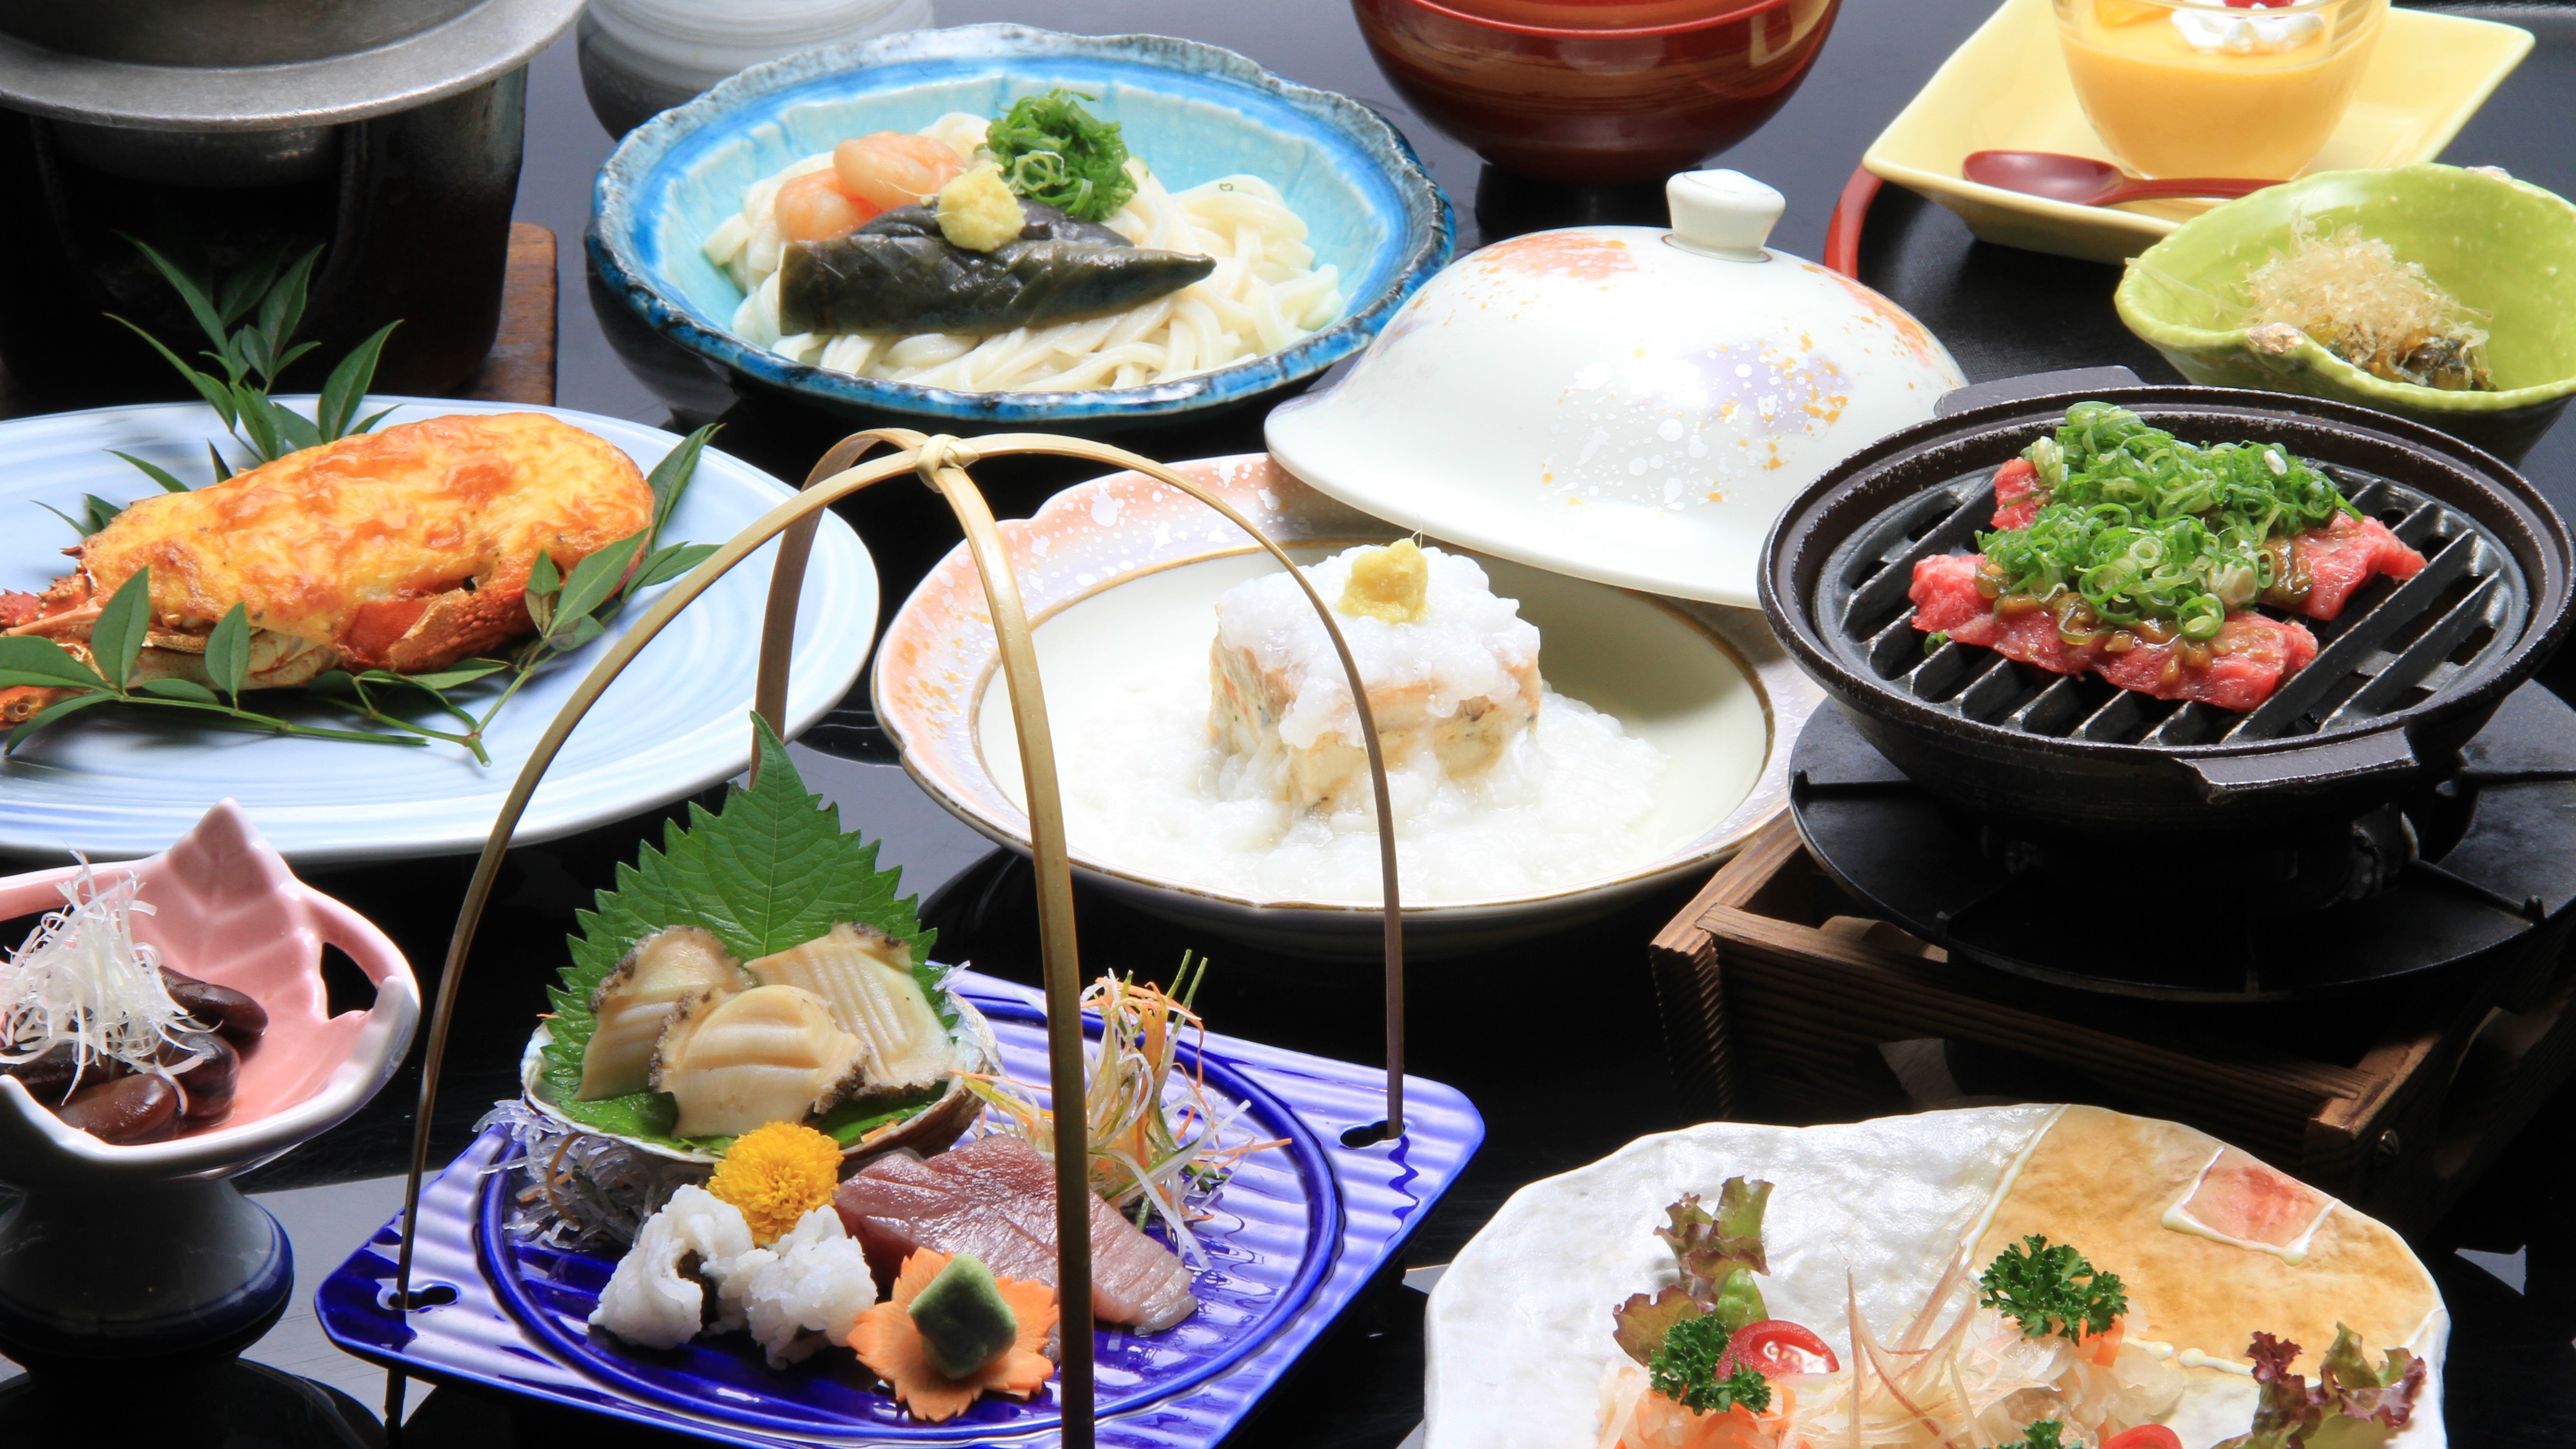 Meat and fresh fish sashimi! Yachiyo's basic kaiseki